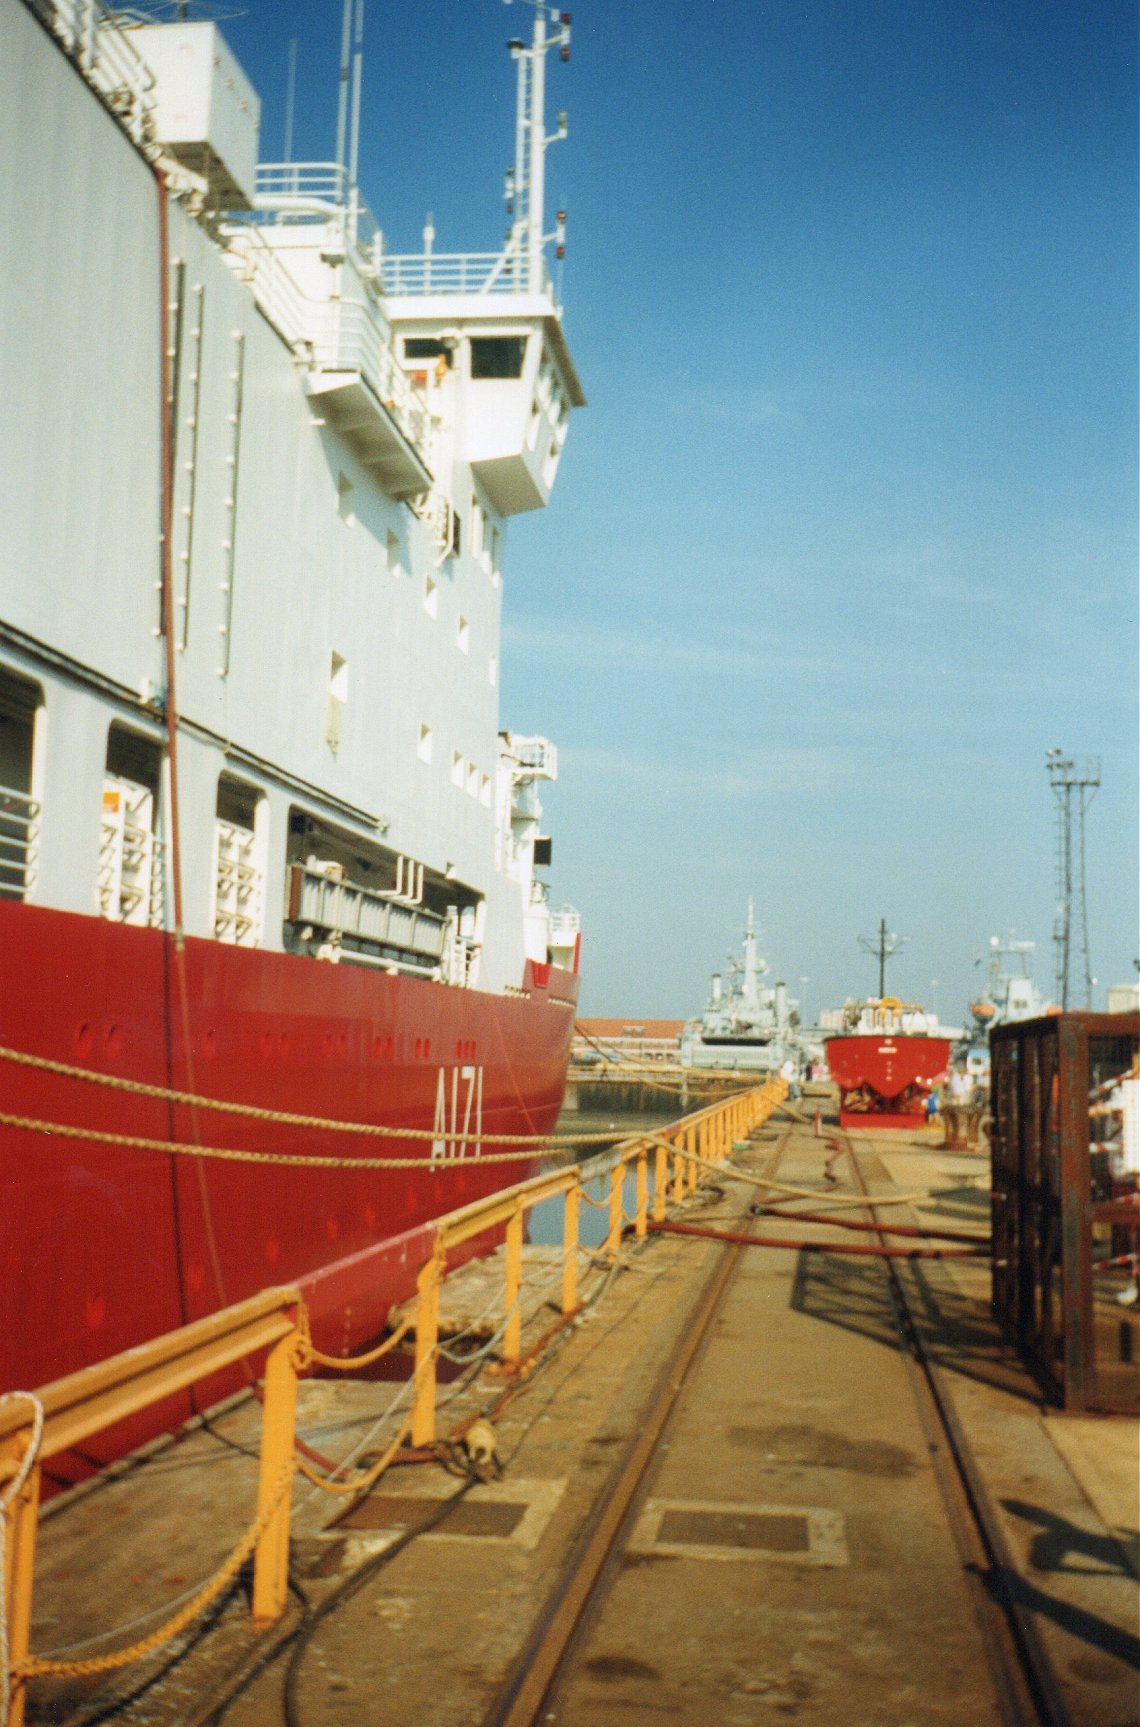 Survey vessel H.M.S. Endurance at Portsmouth Navy Days 1998